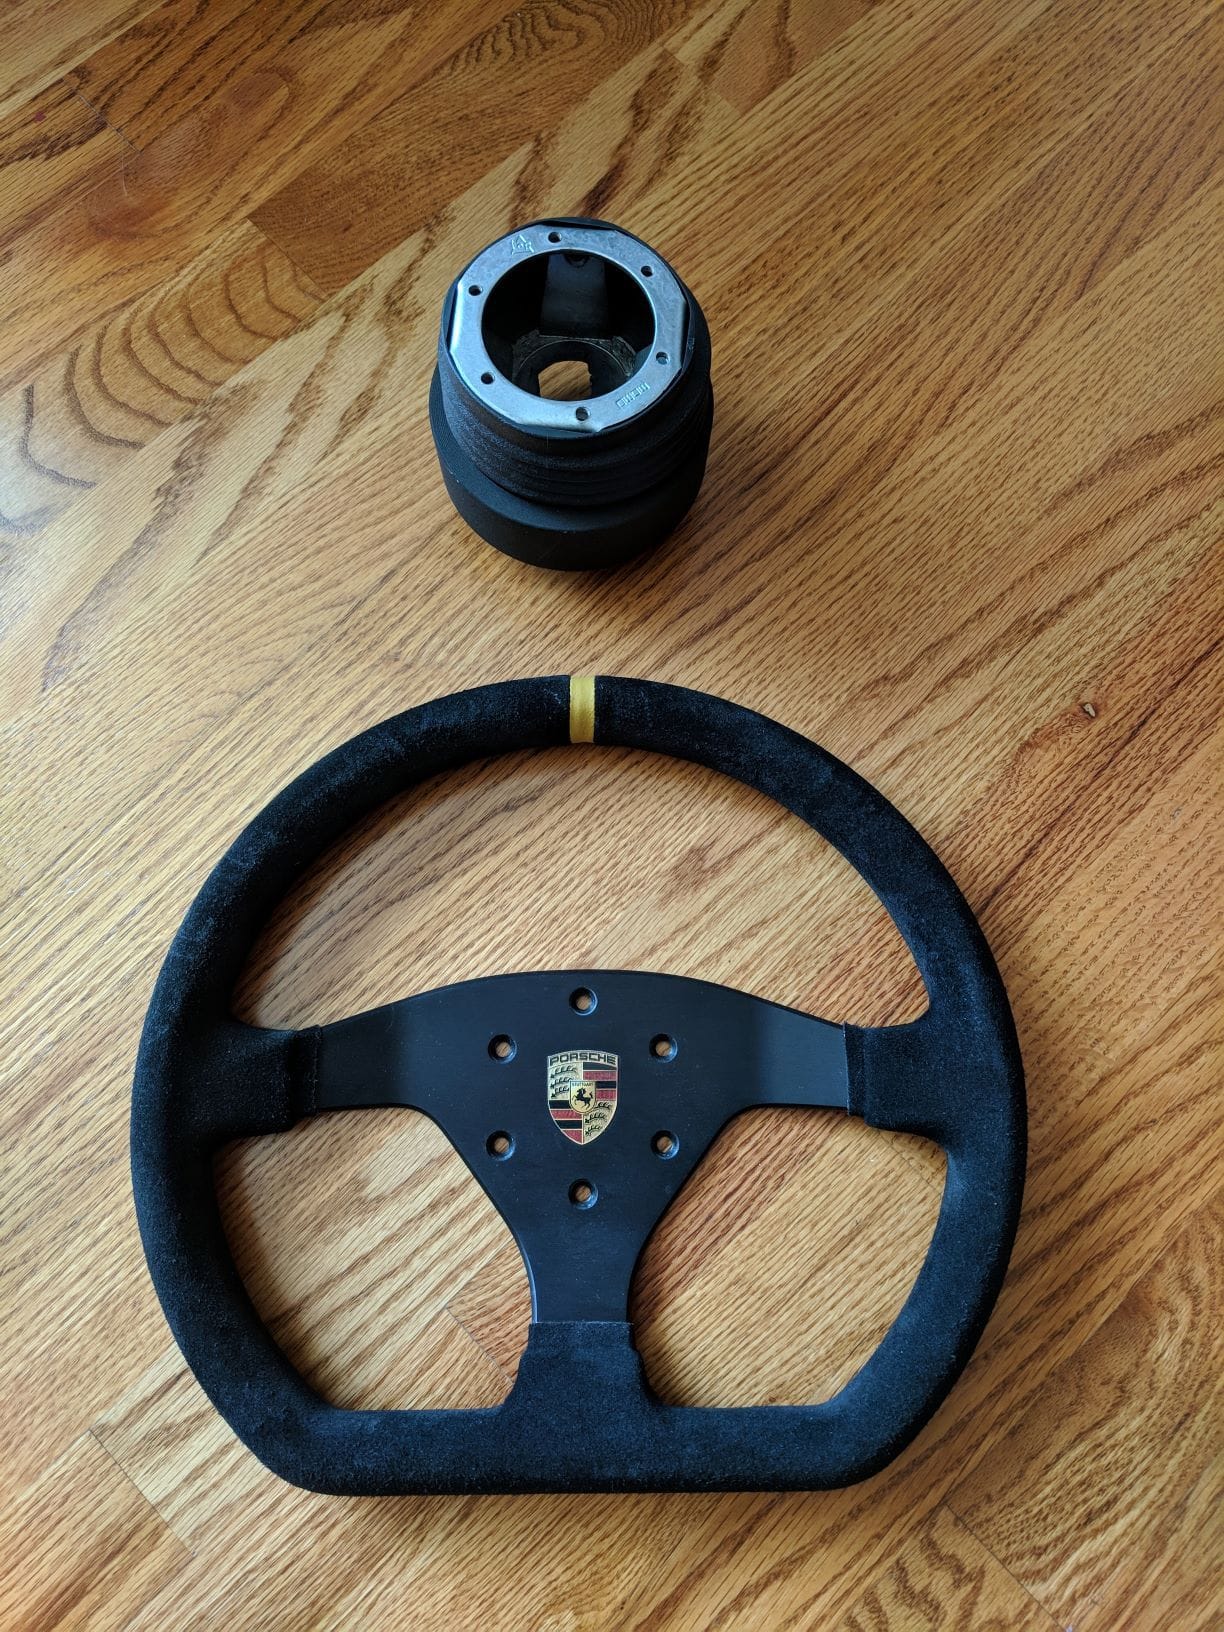 Accessories - GT4 Clubsport Steering Wheel/MOMO Hub - Used - Aurora, CO 80014, United States